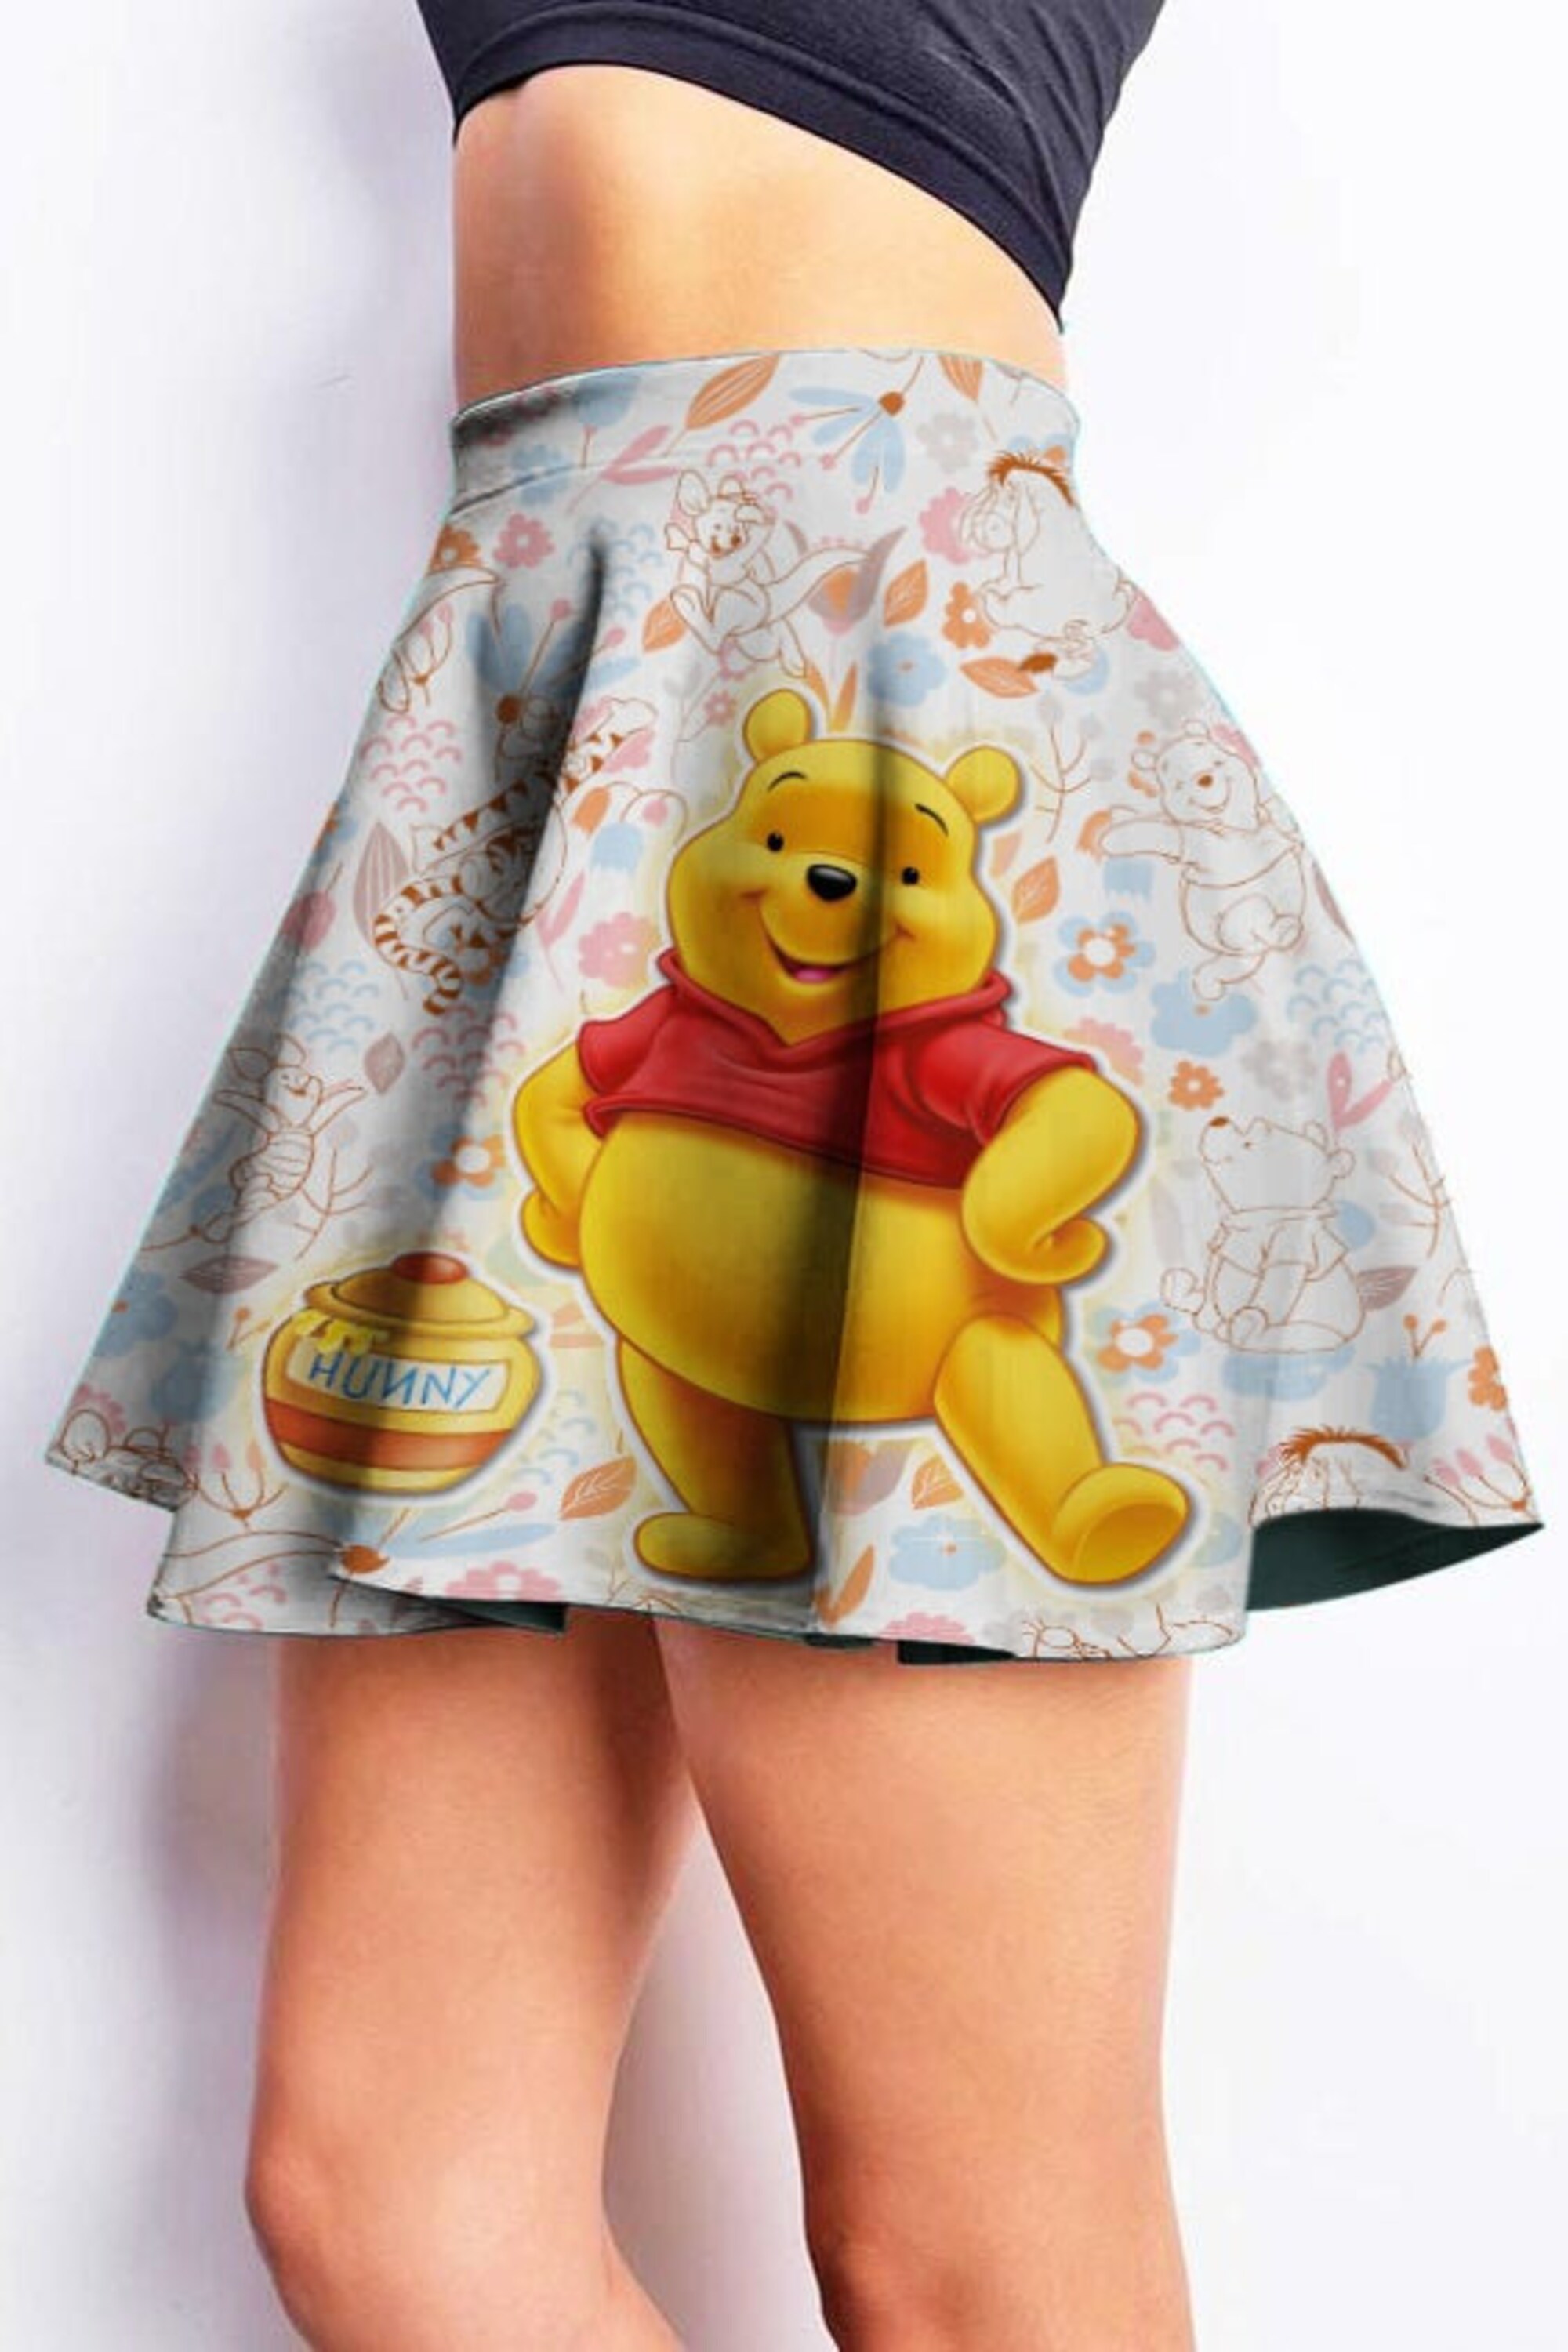 Pooh Bear Flowery Pattern Cute Disney Cartoon Summer Vacation Outfits High Waisted Skater Circle Flowy Skirt Dress Clothes Women Girls